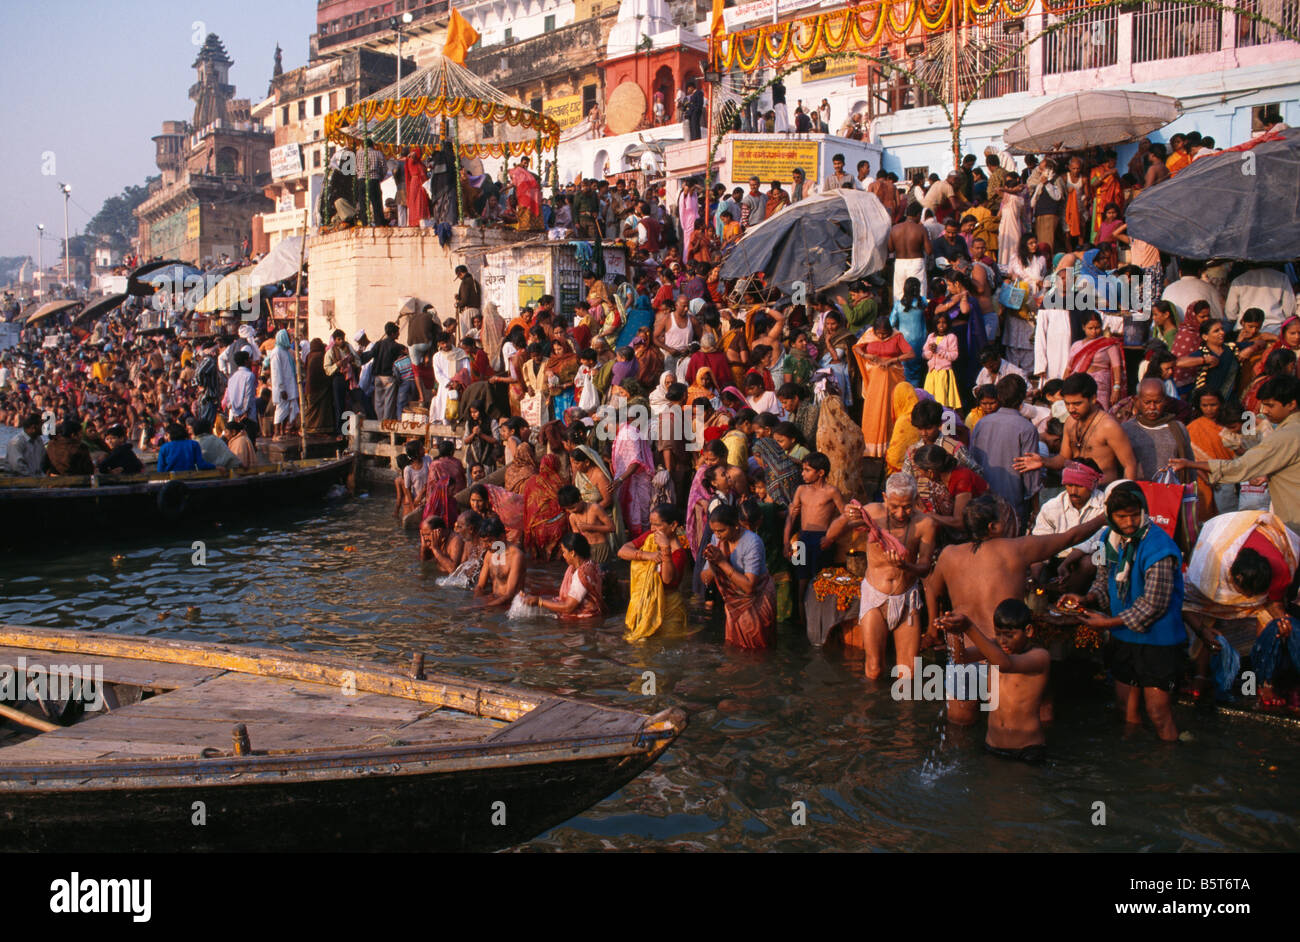 Pilgrims On The Ghats Of The River Ganges At Varanasi During The Kartik Purnima Festival In